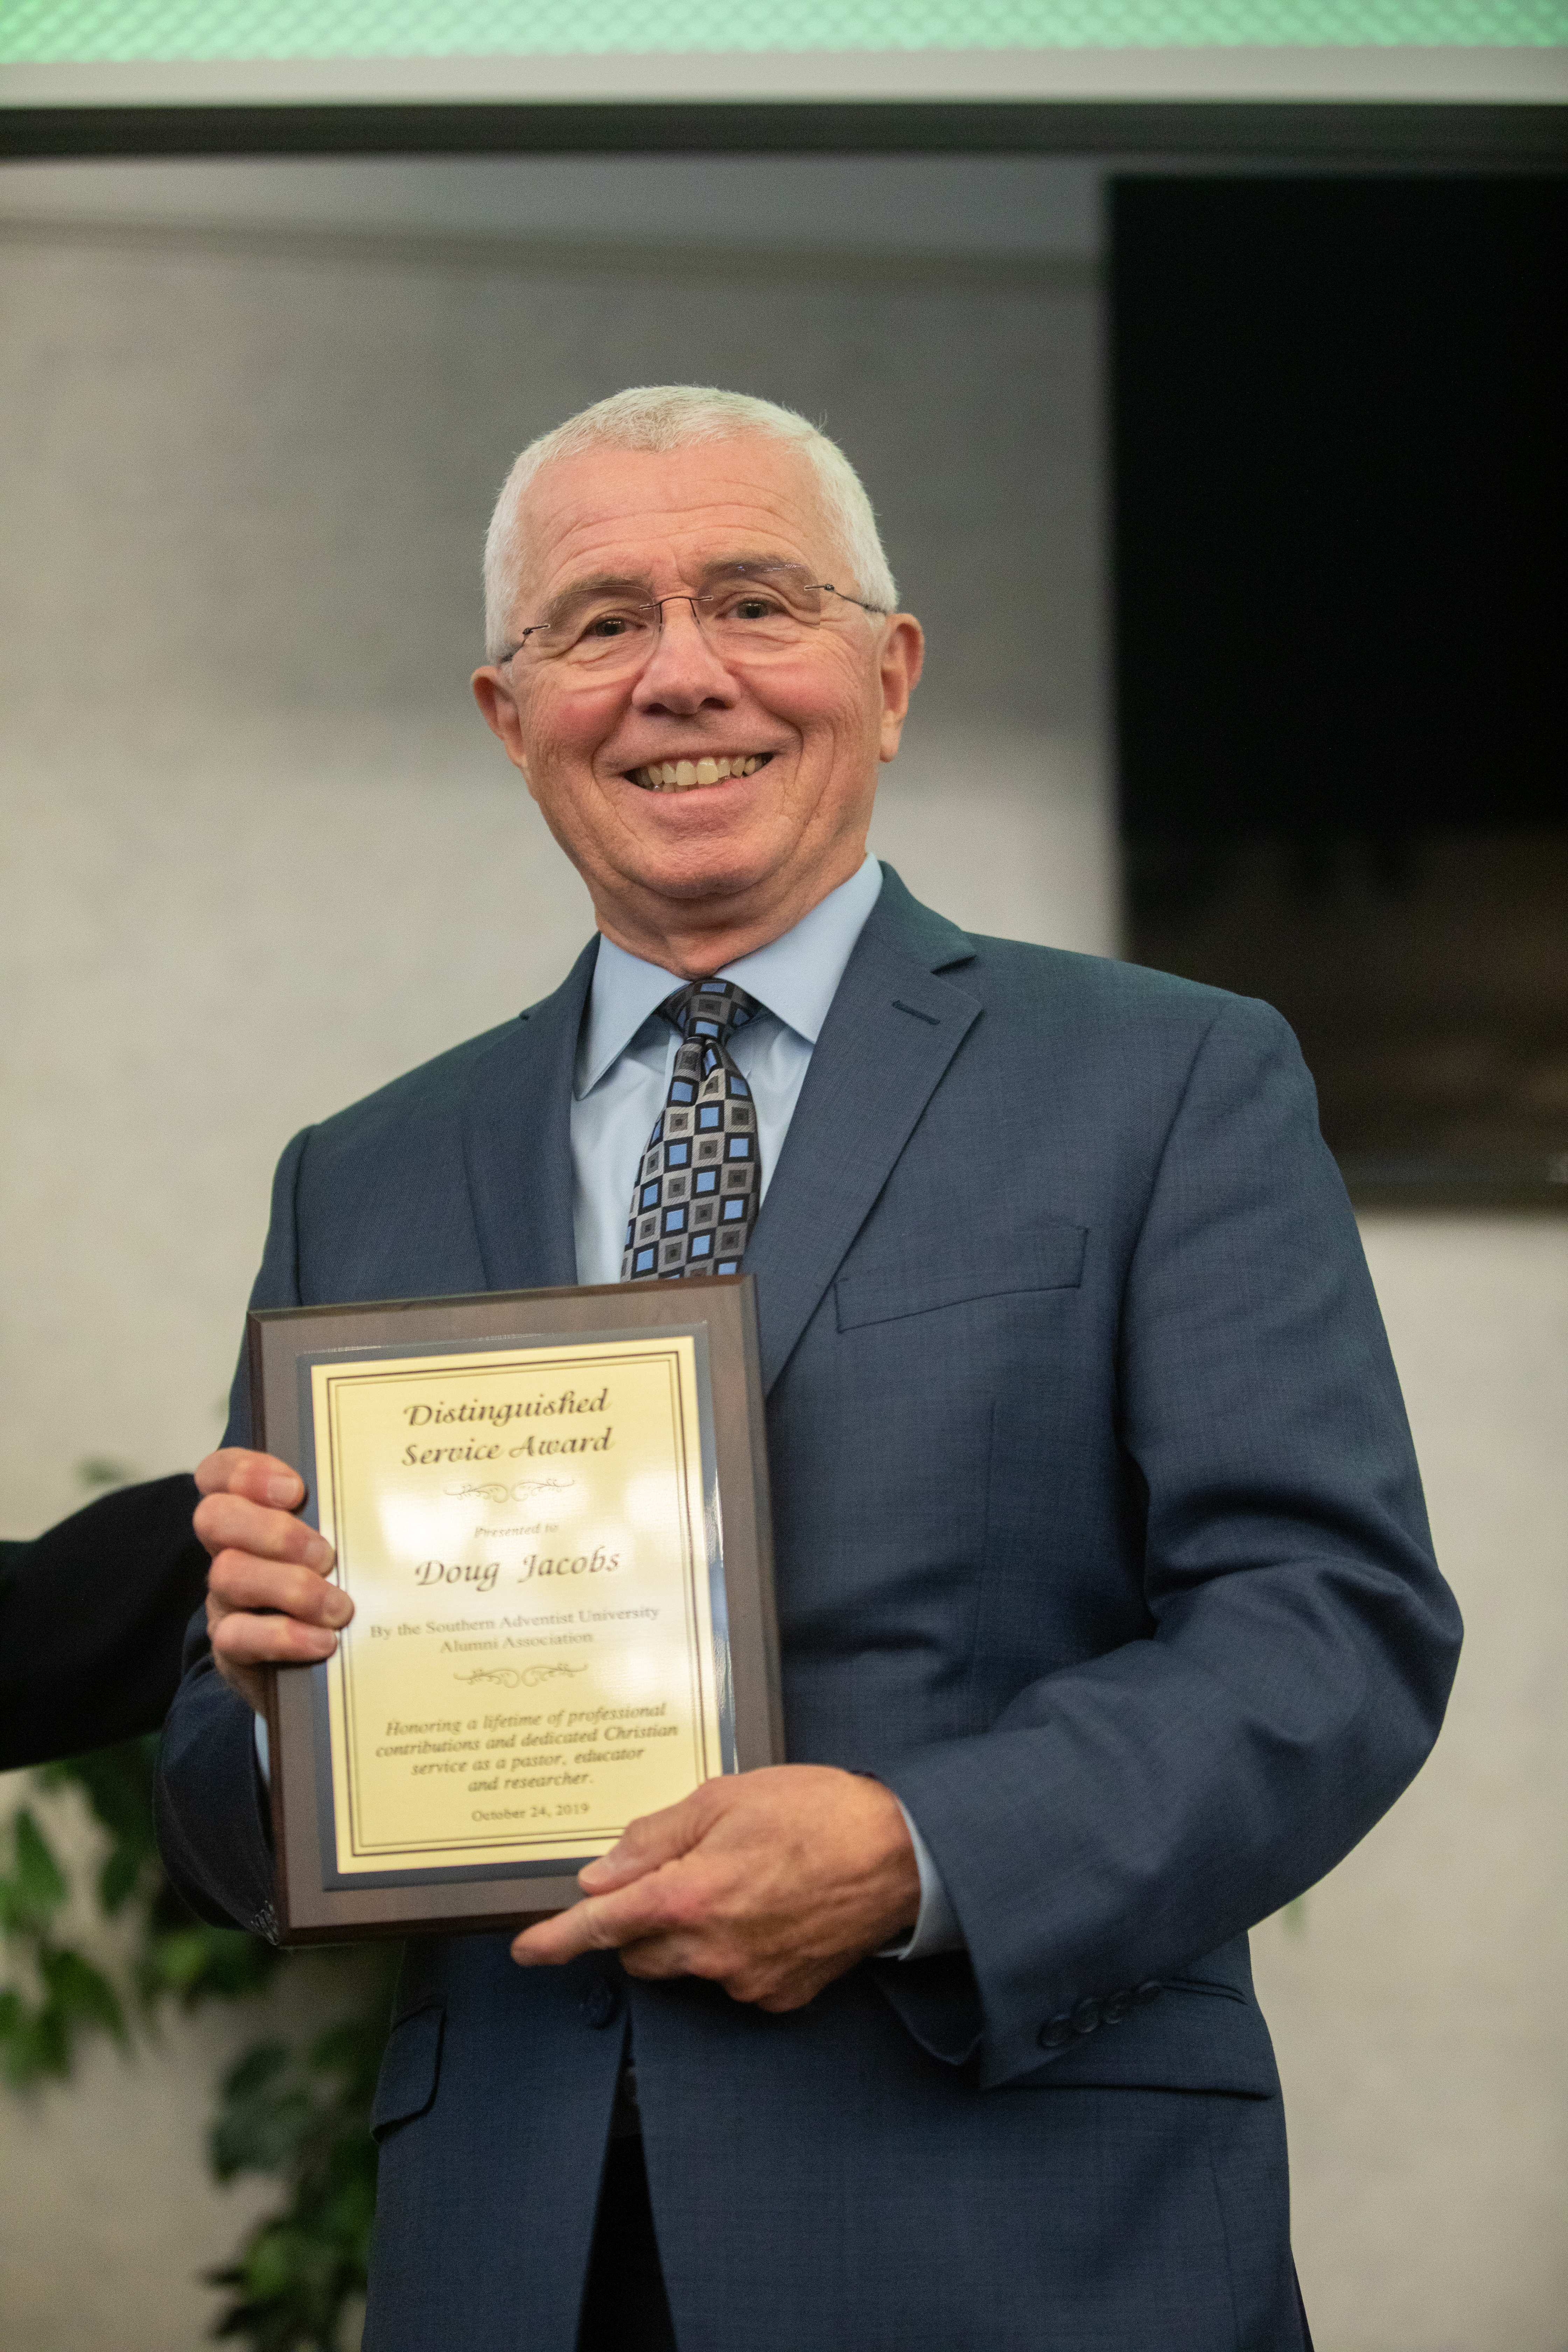 Doug Jacobs receiving an alumni award